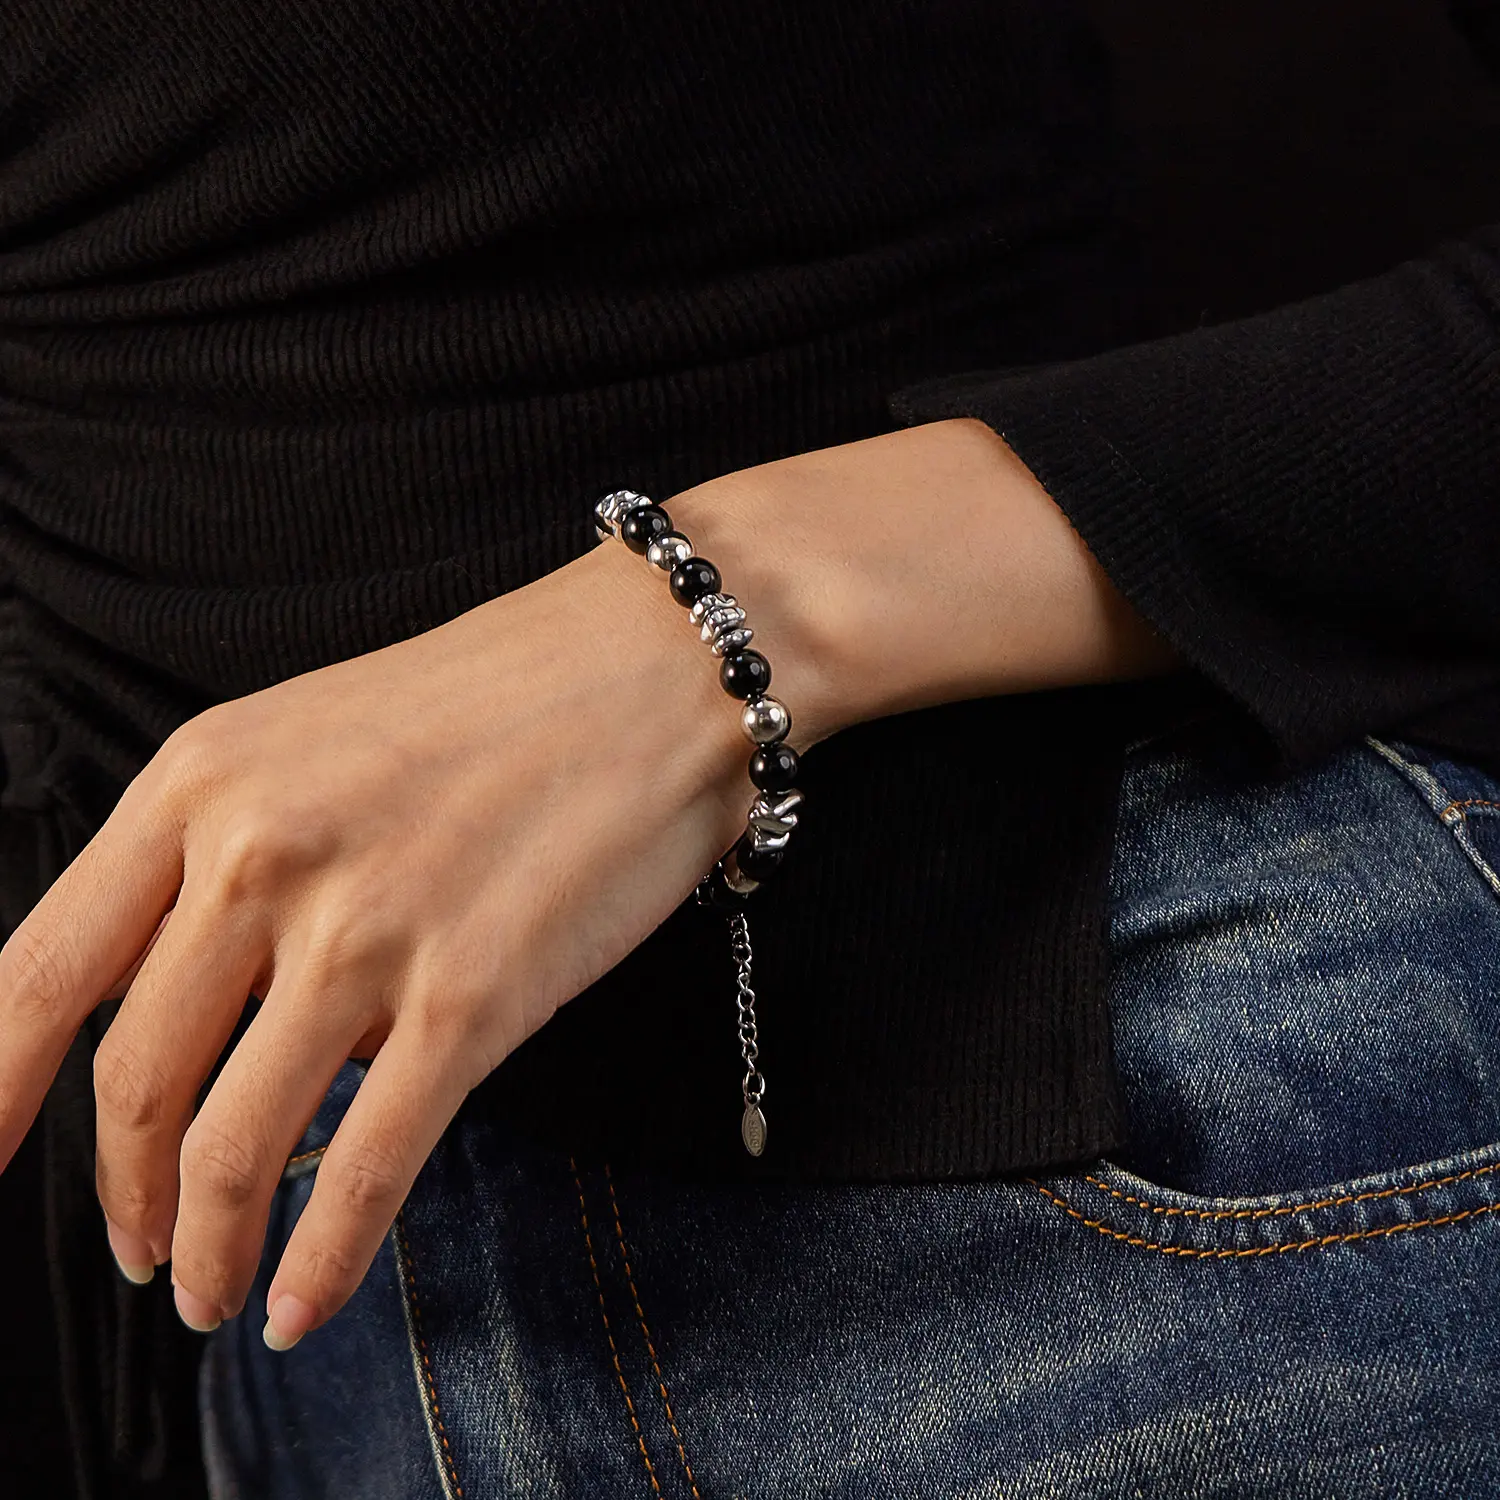 Unisex Adjustable Fashion Waterproof Non-Tarnish Simple Natural Stone Beaded Stainless Steel Jewelry Bracelet